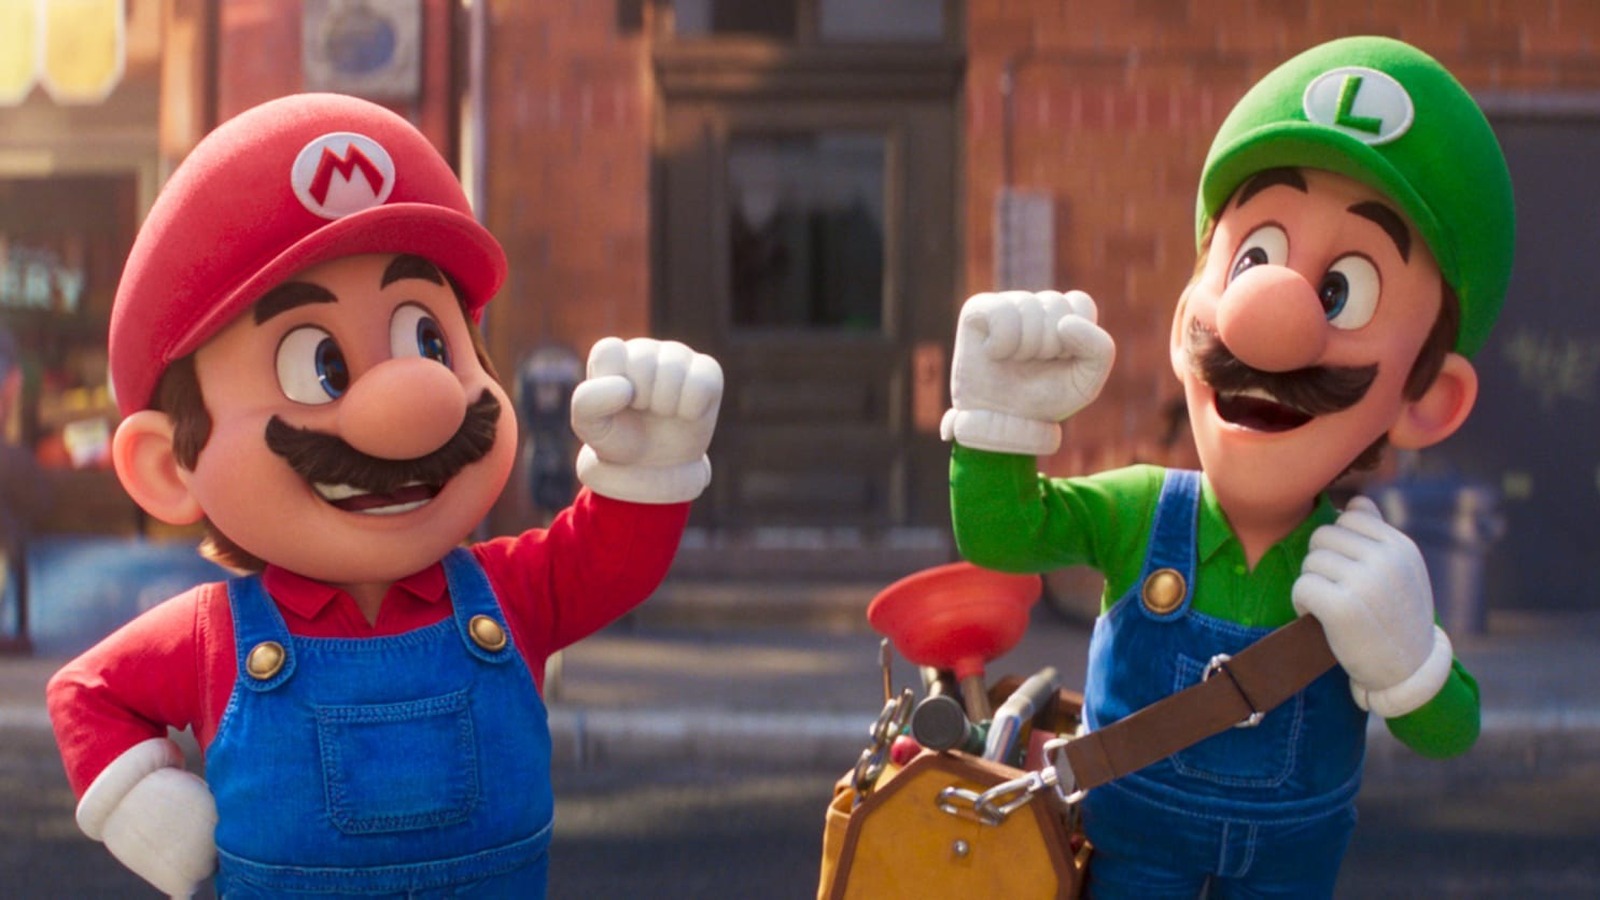 Super Mario Bros. Wonder (Video Game 2023) - IMDb